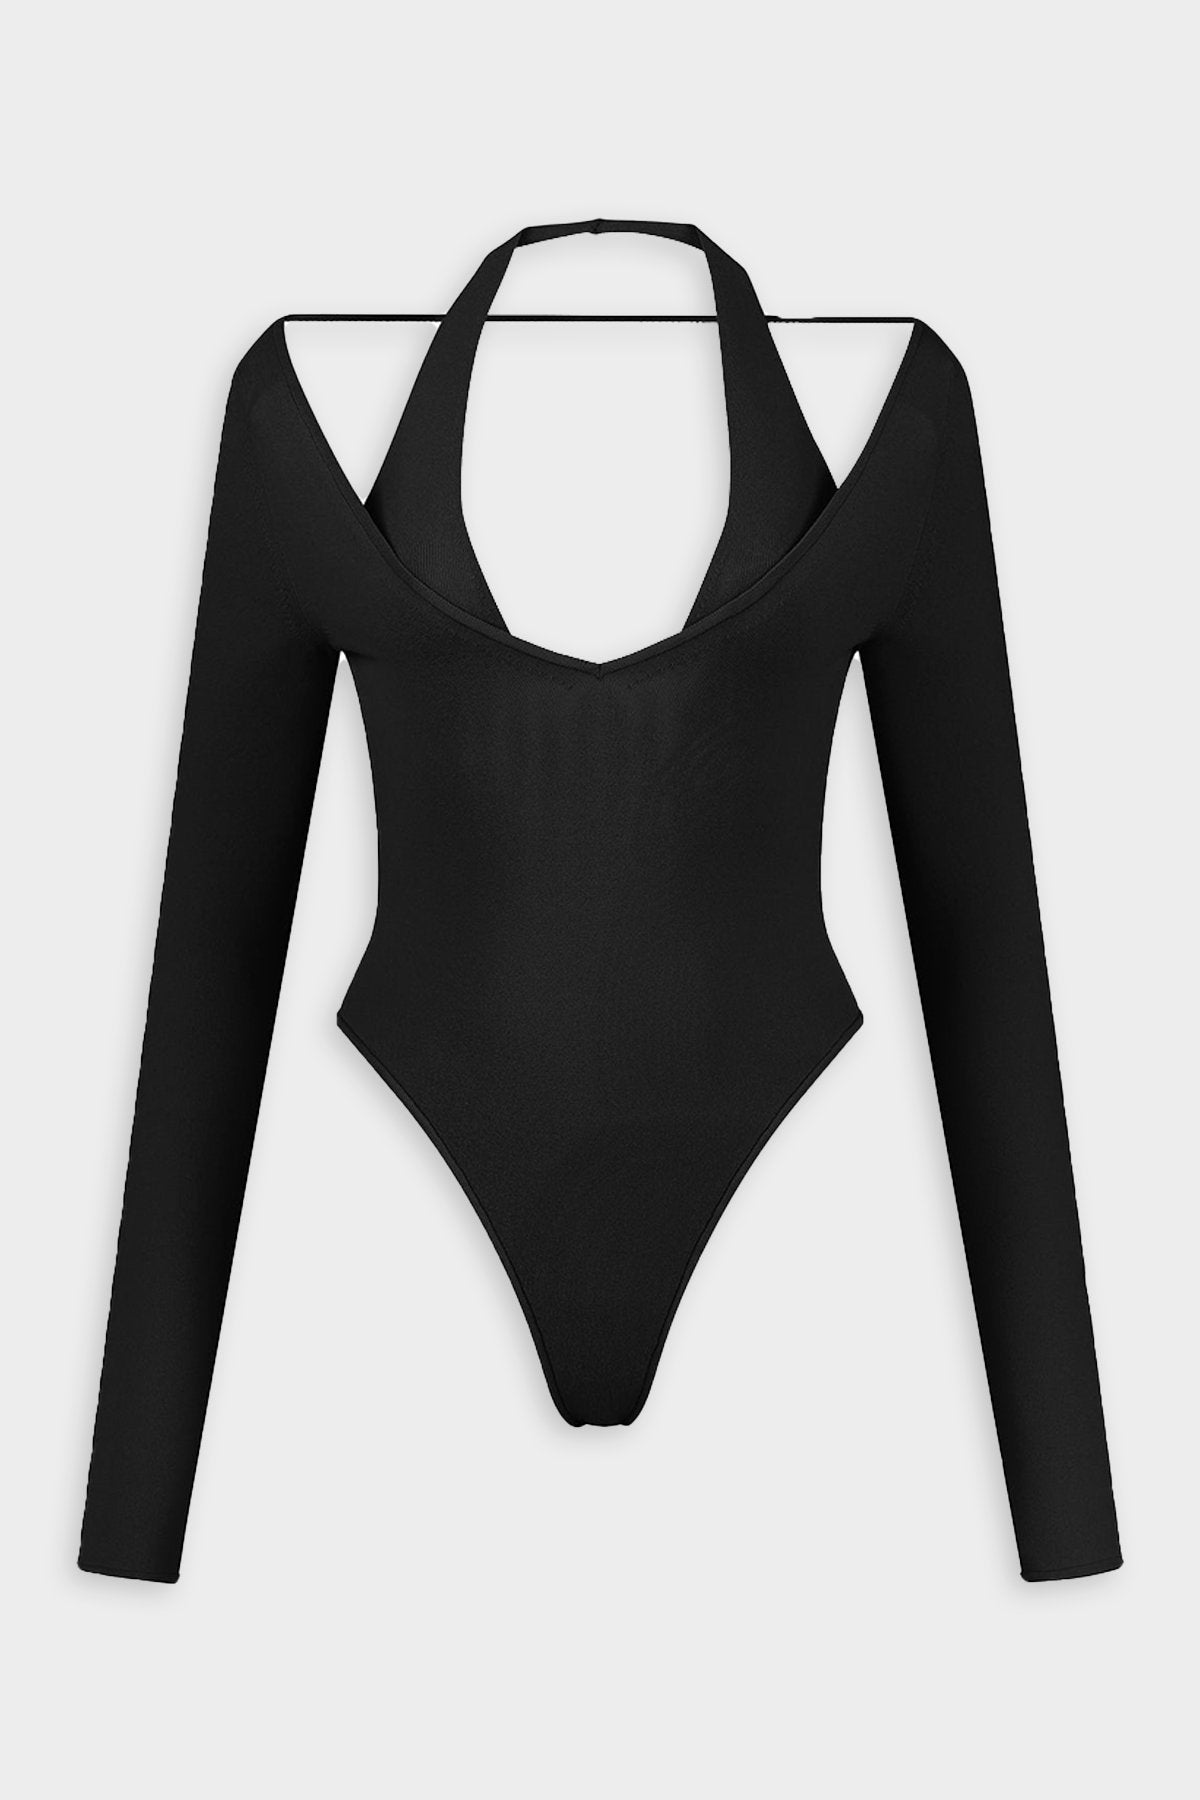 Suran Ballerina Bodysuit in Black - shop-olivia.com